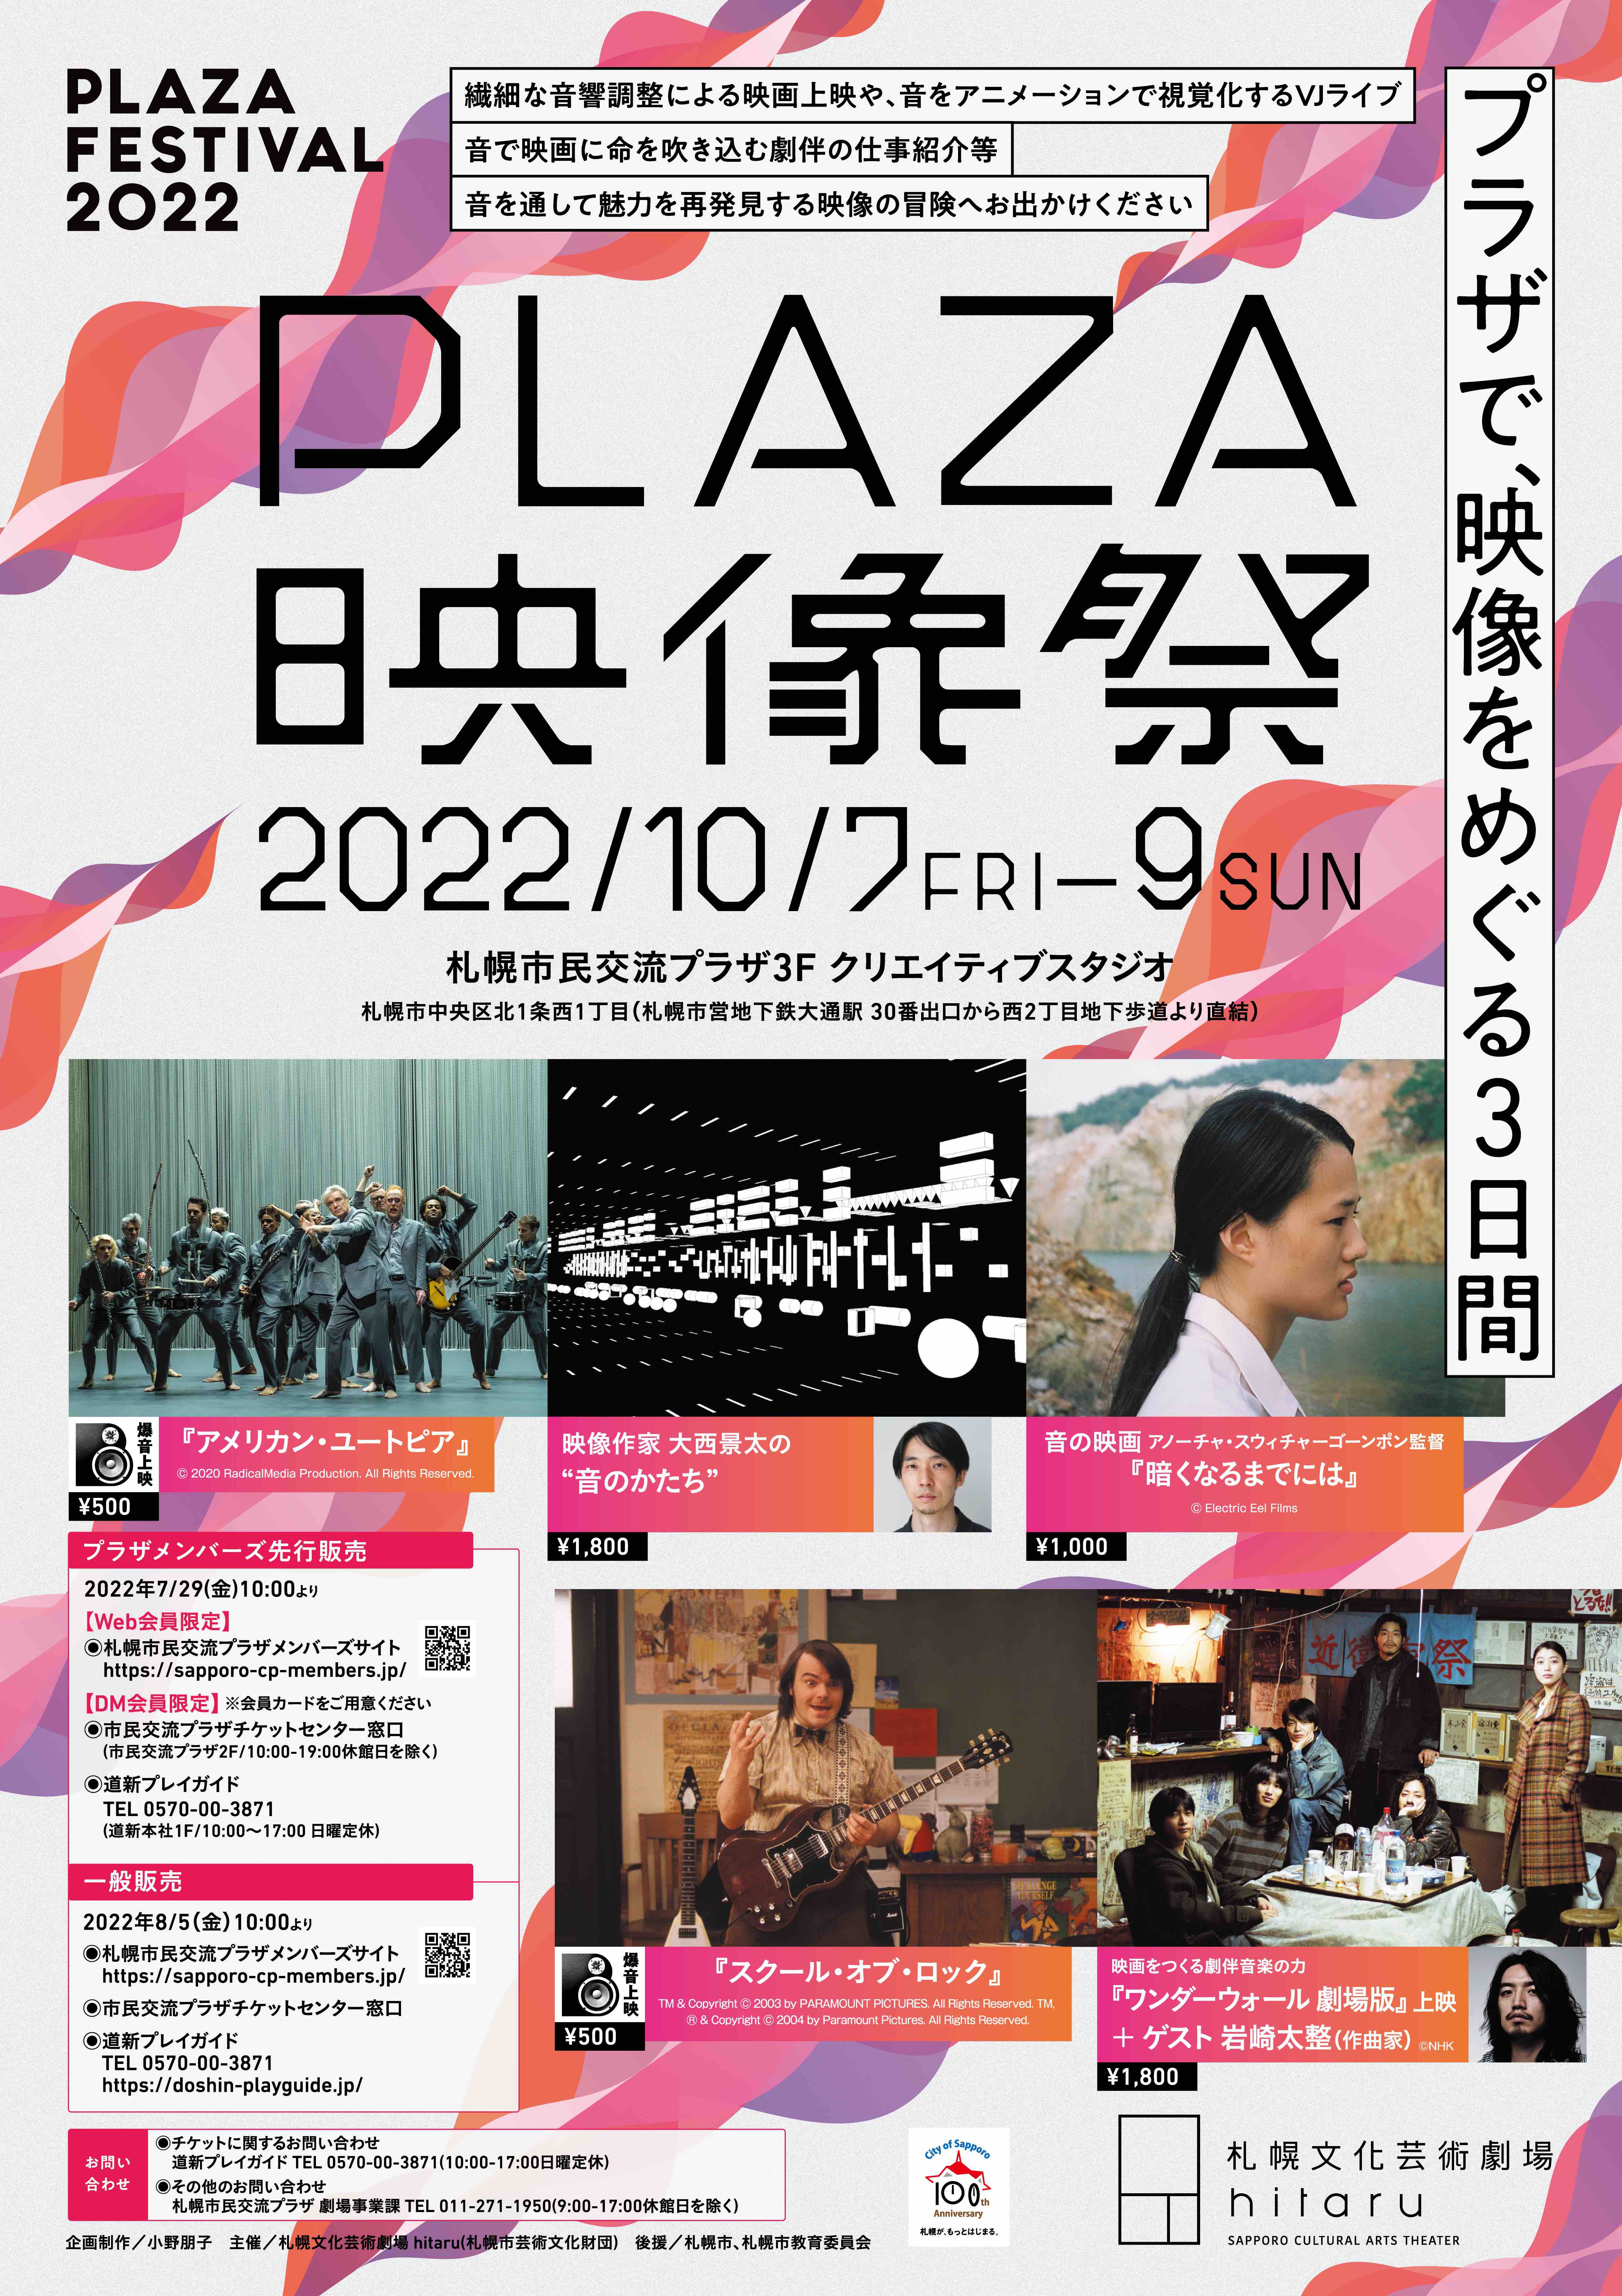 Plaza Festival 2022 Plaza Film Festivalimage